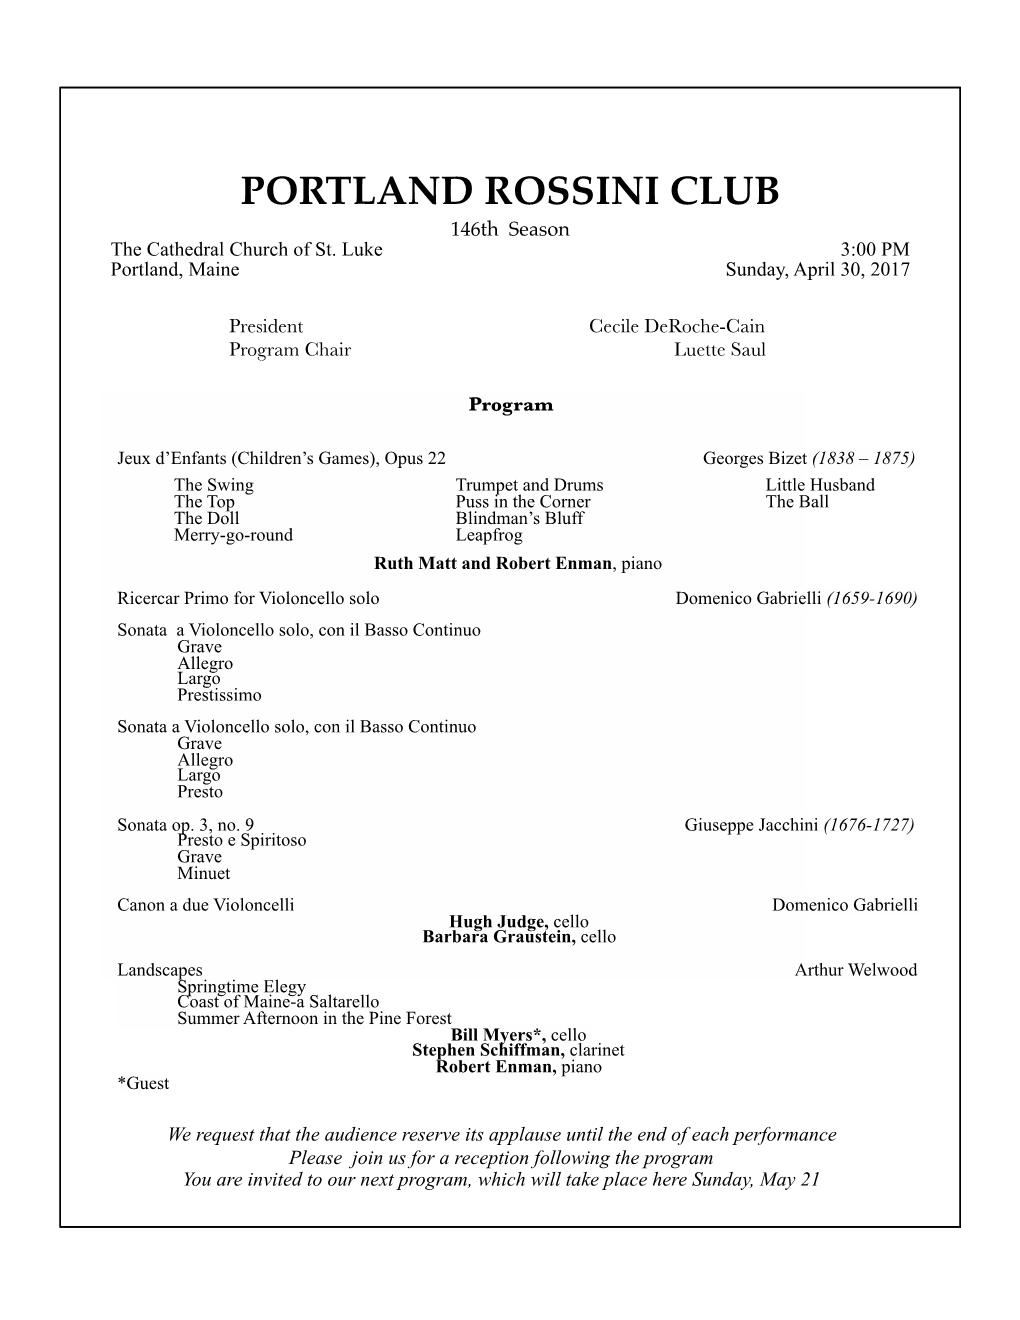 Rossini Program 4-30-17